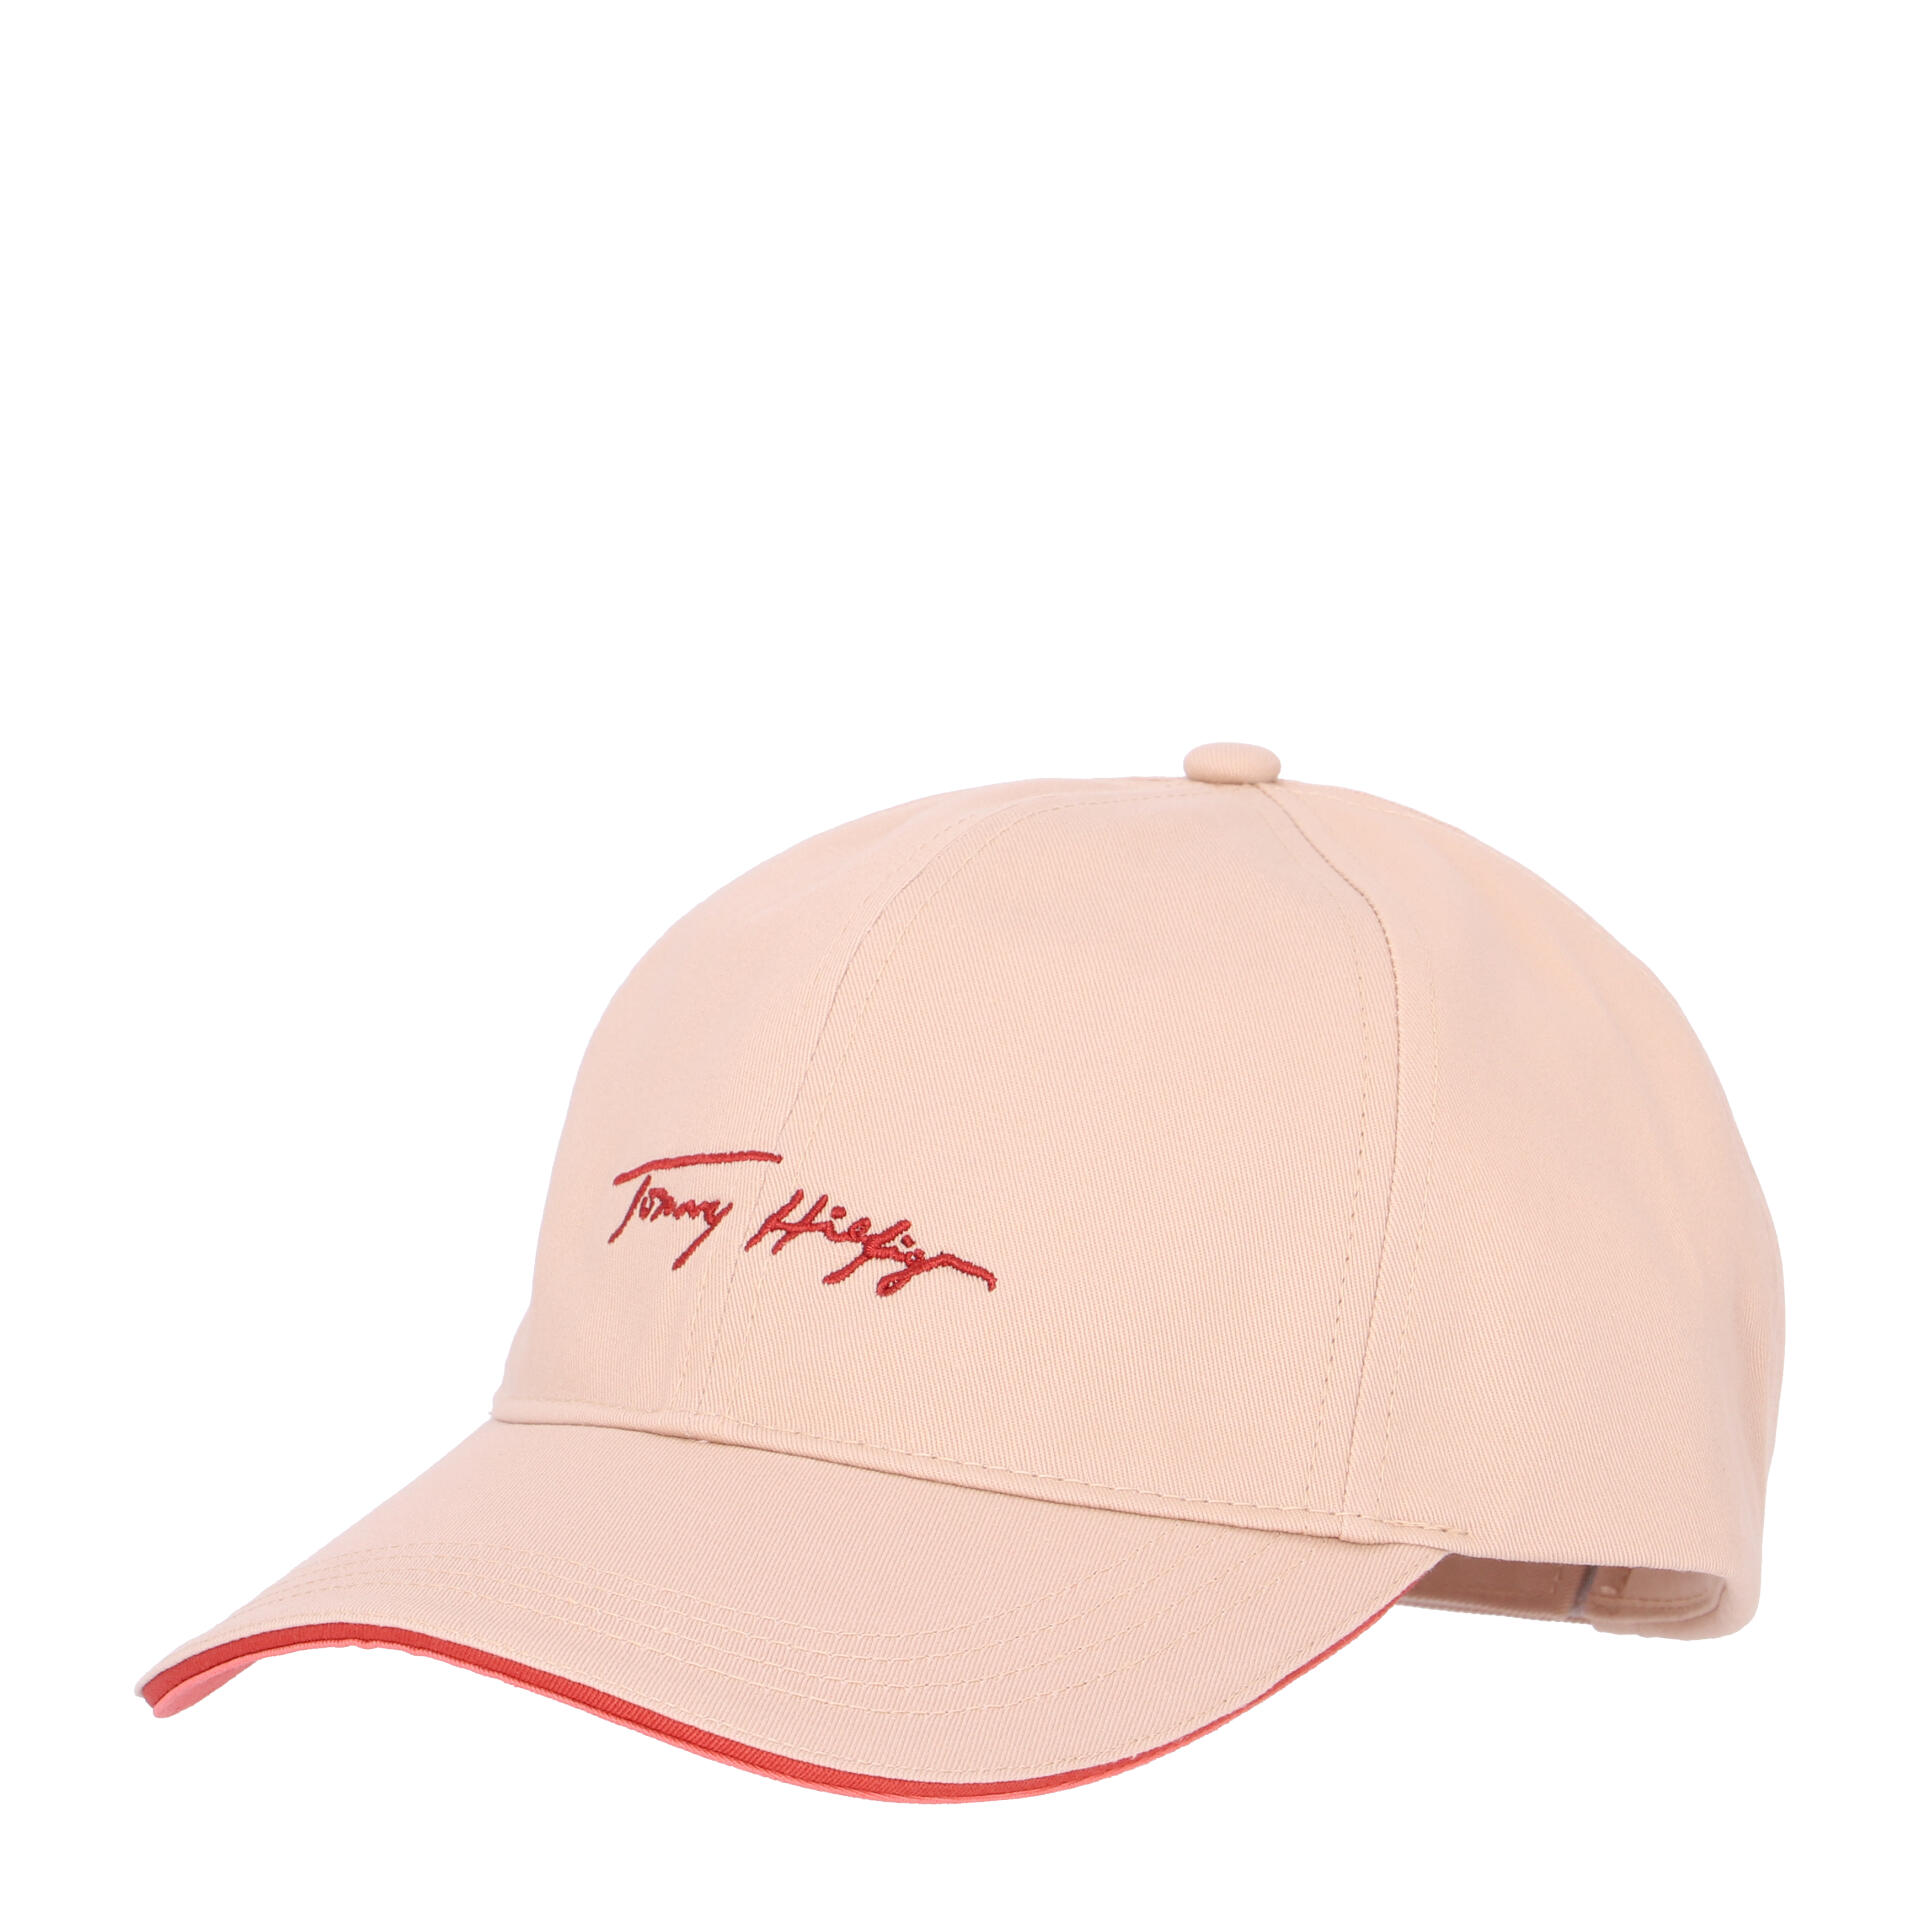 Tommy Hilfiger Iconic Signature Cap